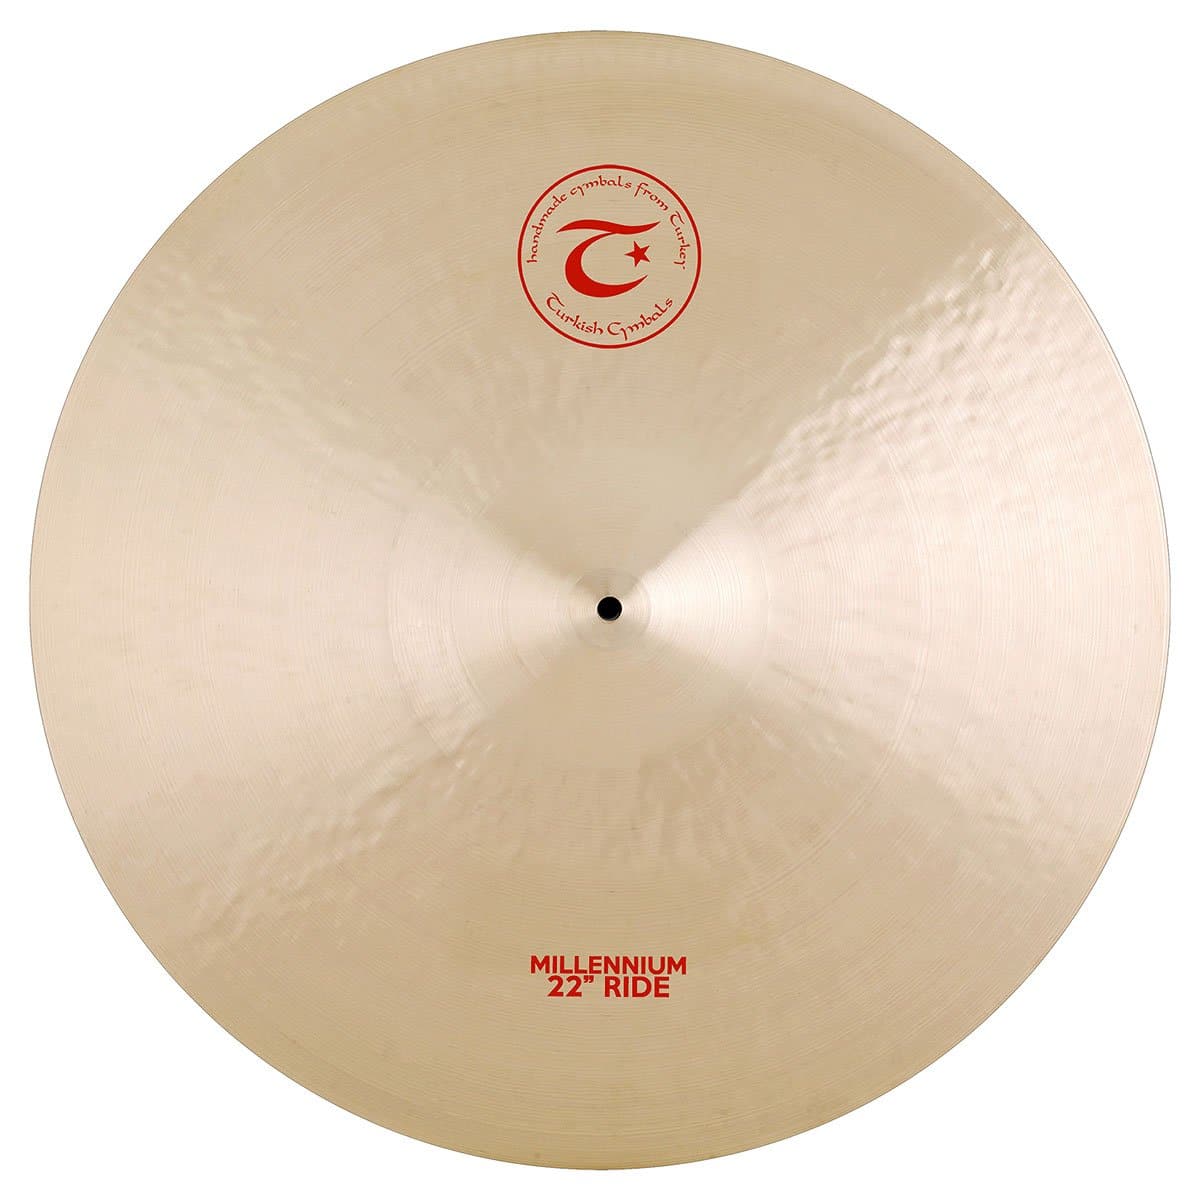 Turkish Millennium Ride Cymbal 22" 2310 grams